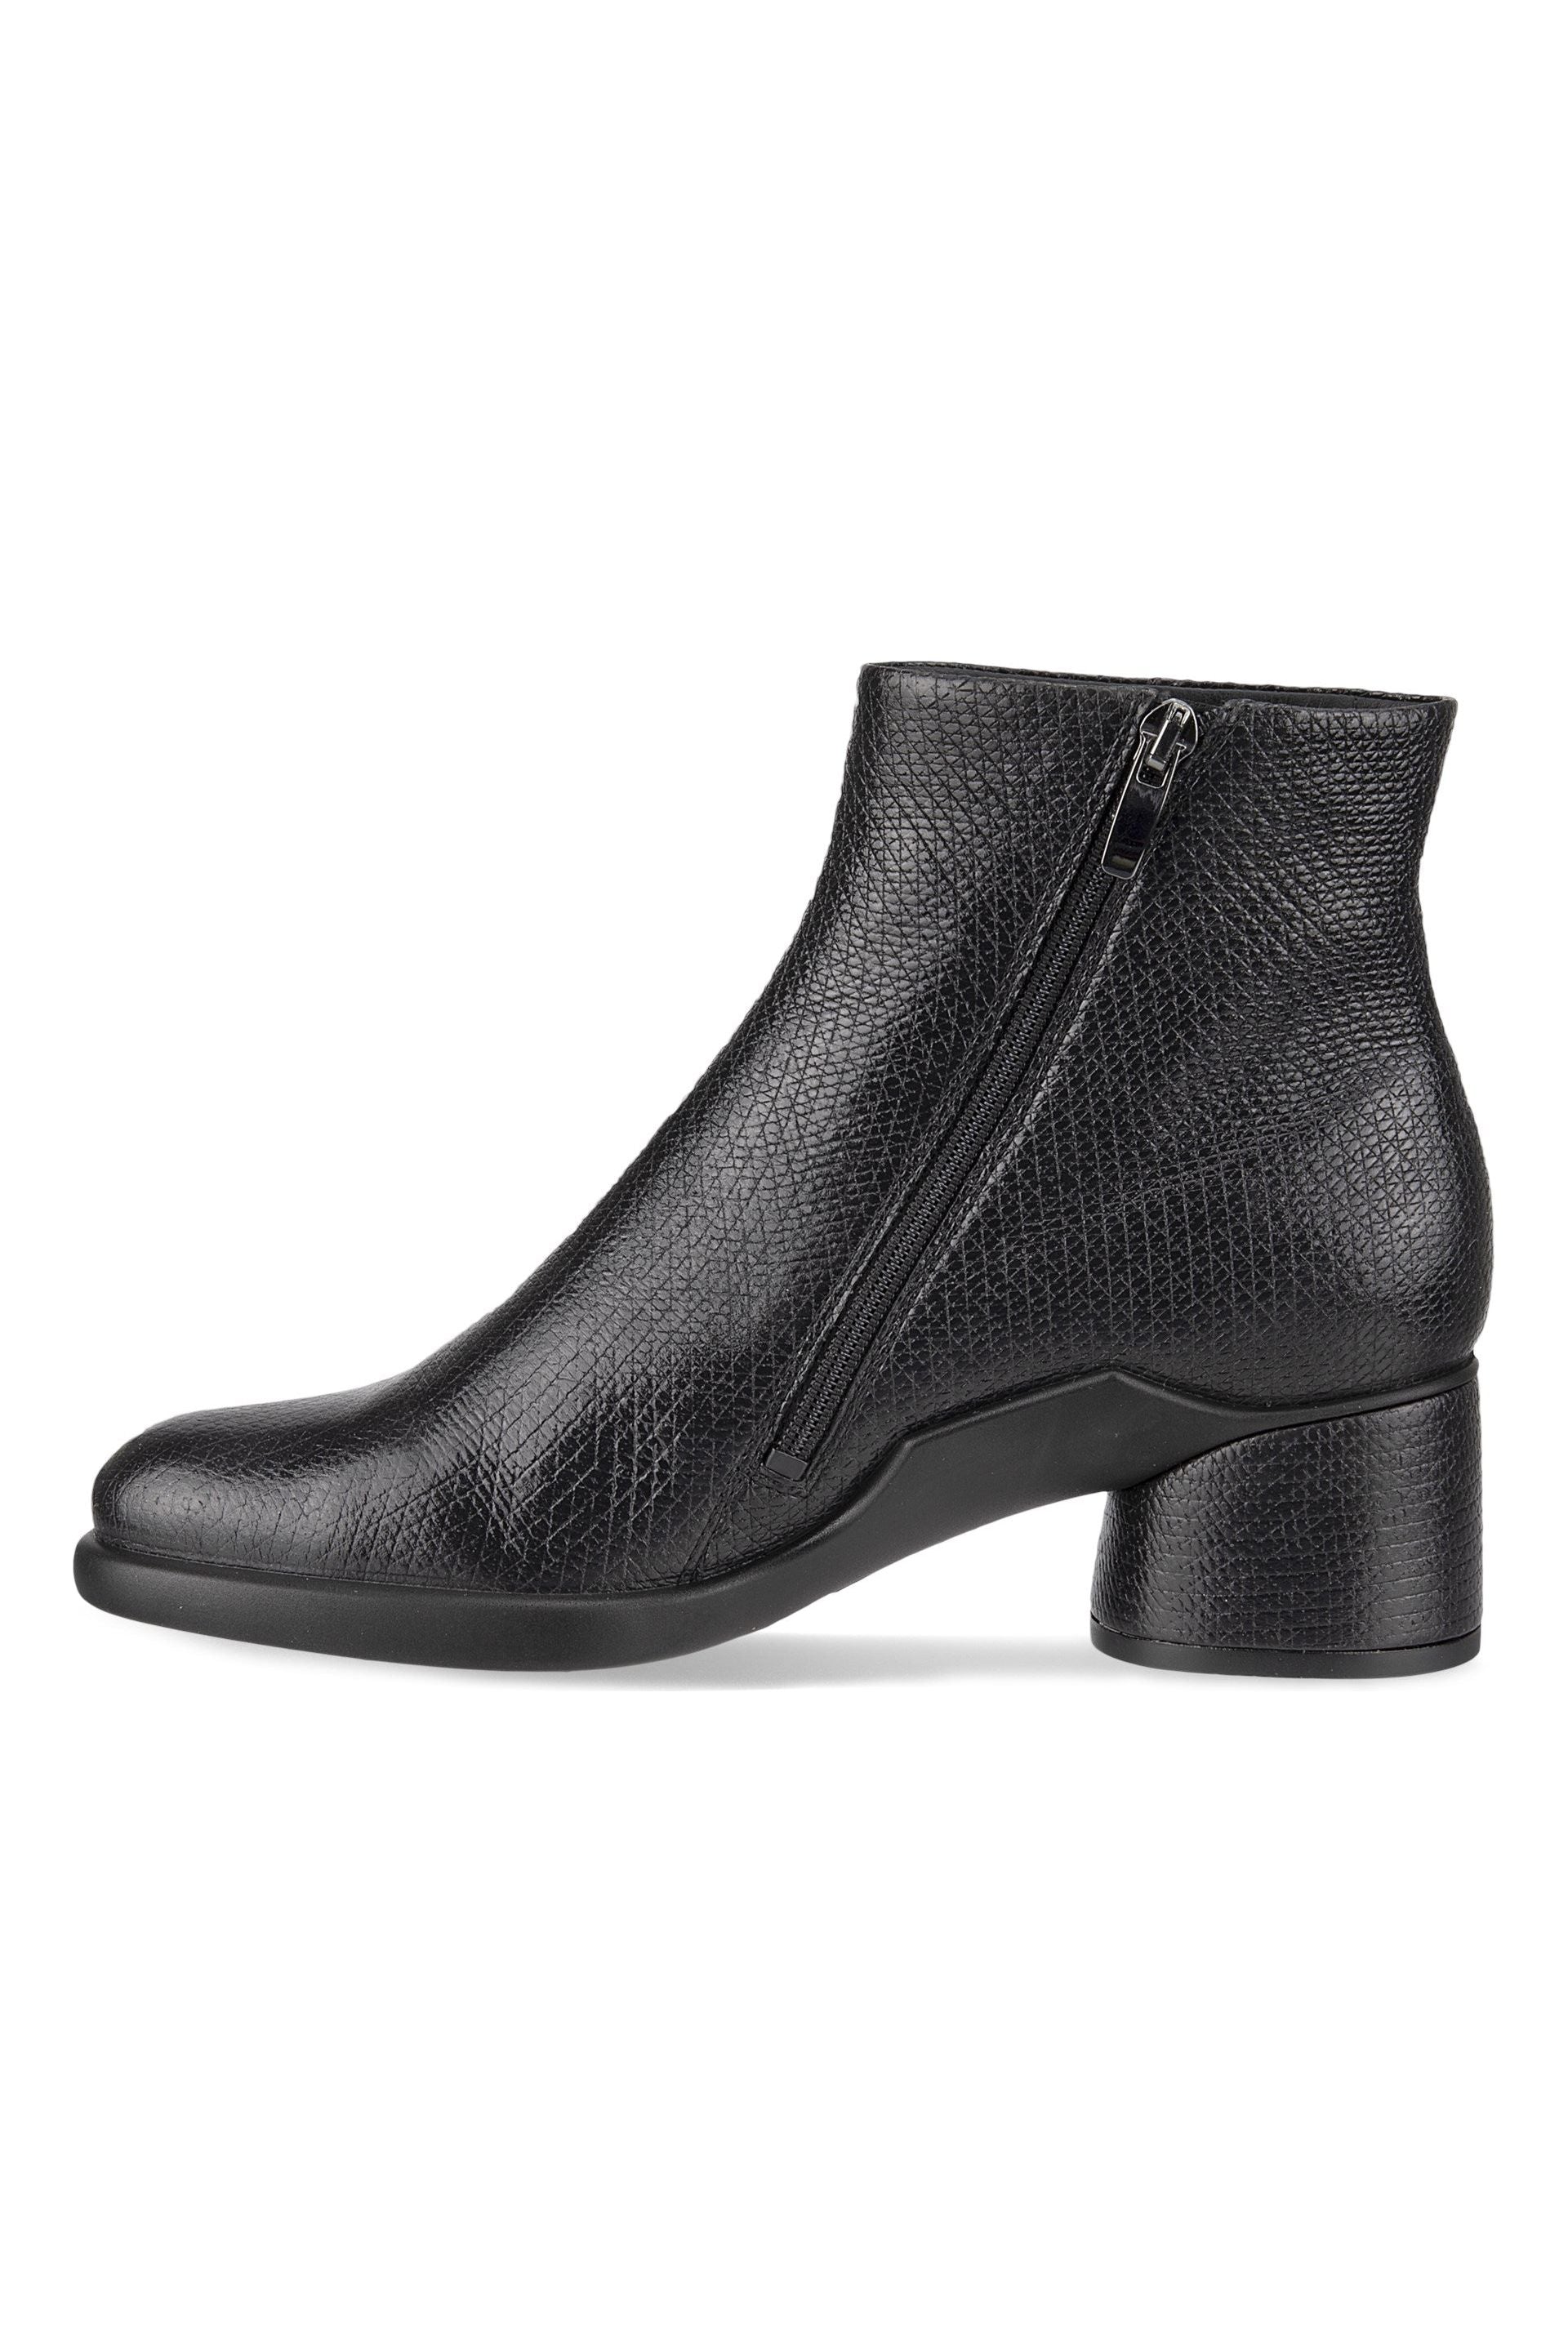 Ecco 222413-11001 Black Croc leather boot